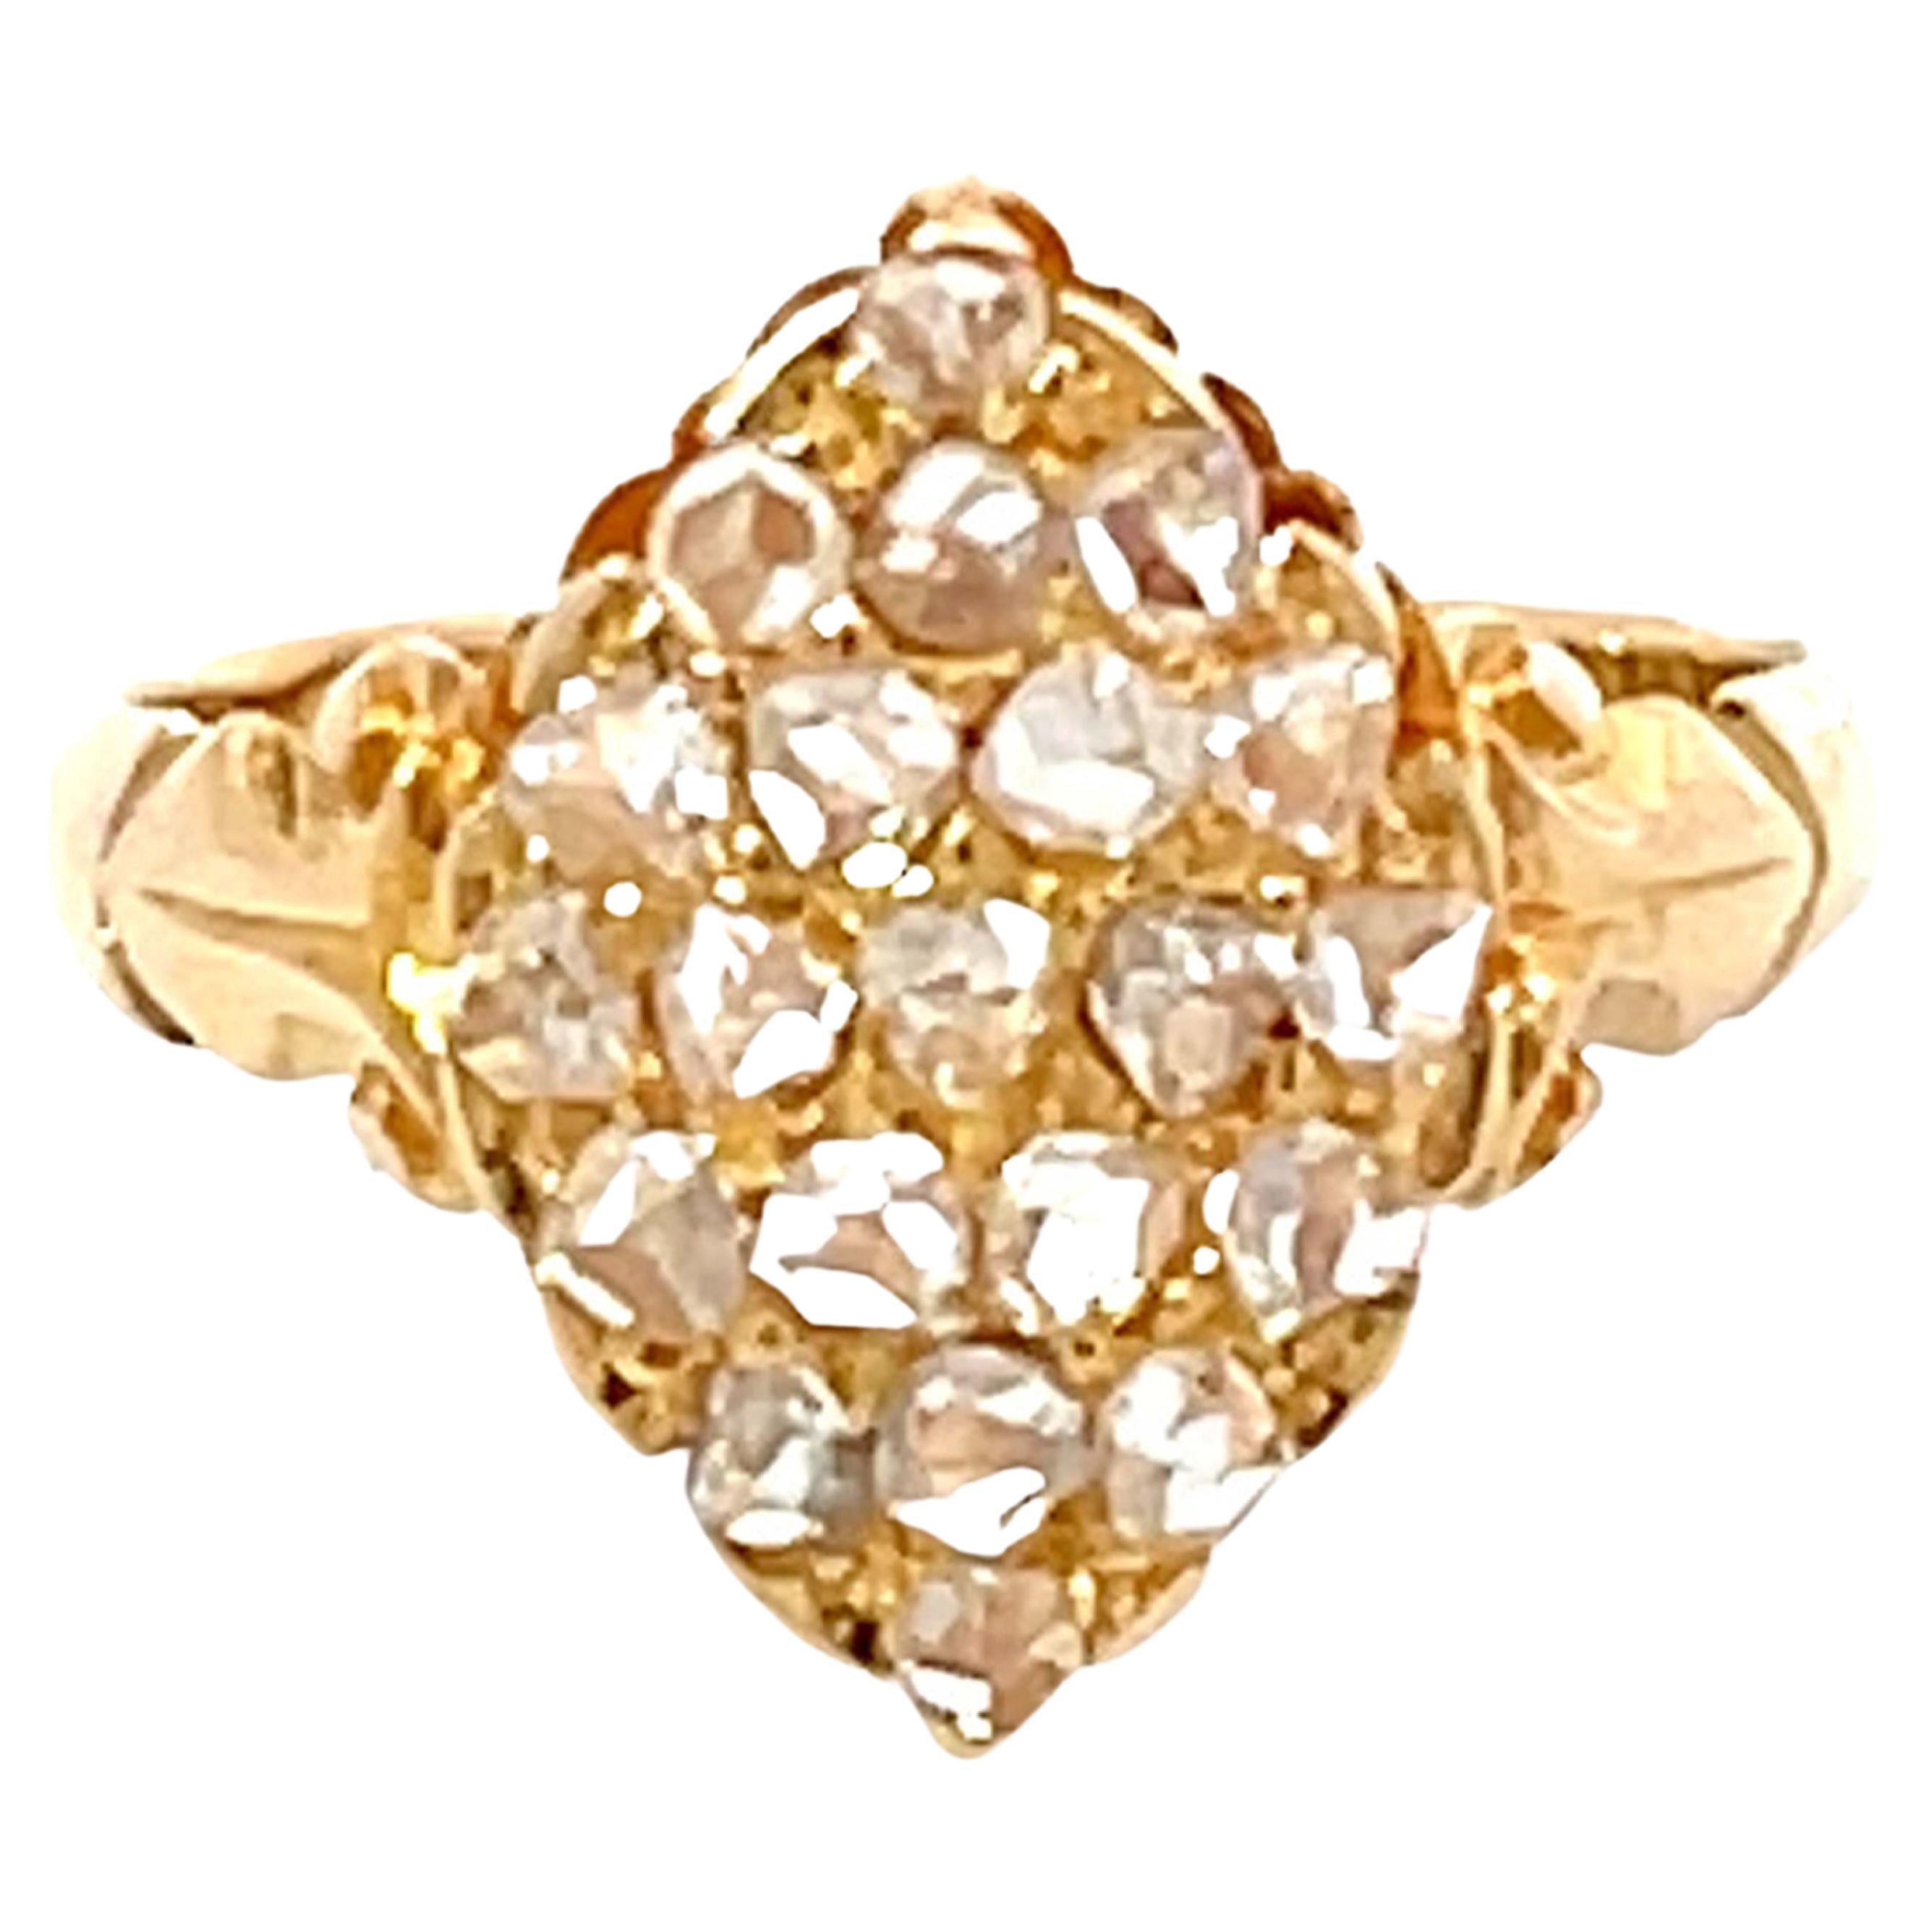 Antique European Rose Cut Diamond Ring in 18K Yellow Gold